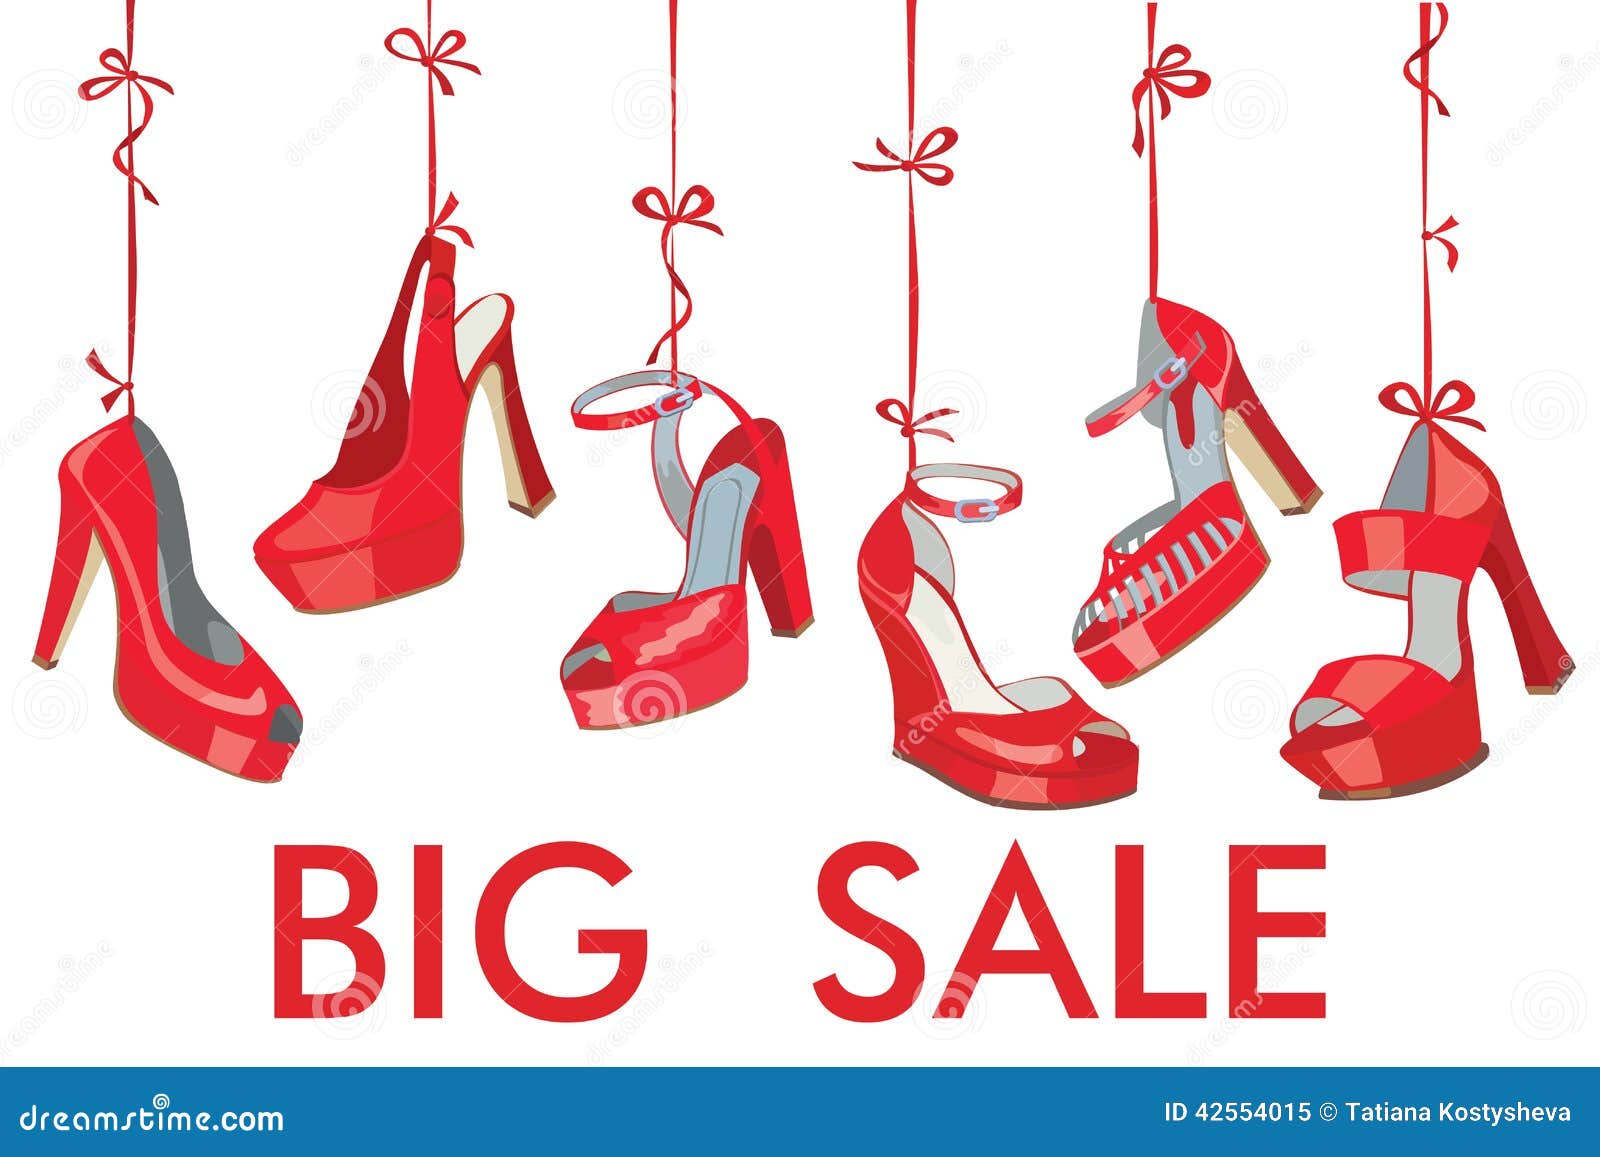 womens heels on sale